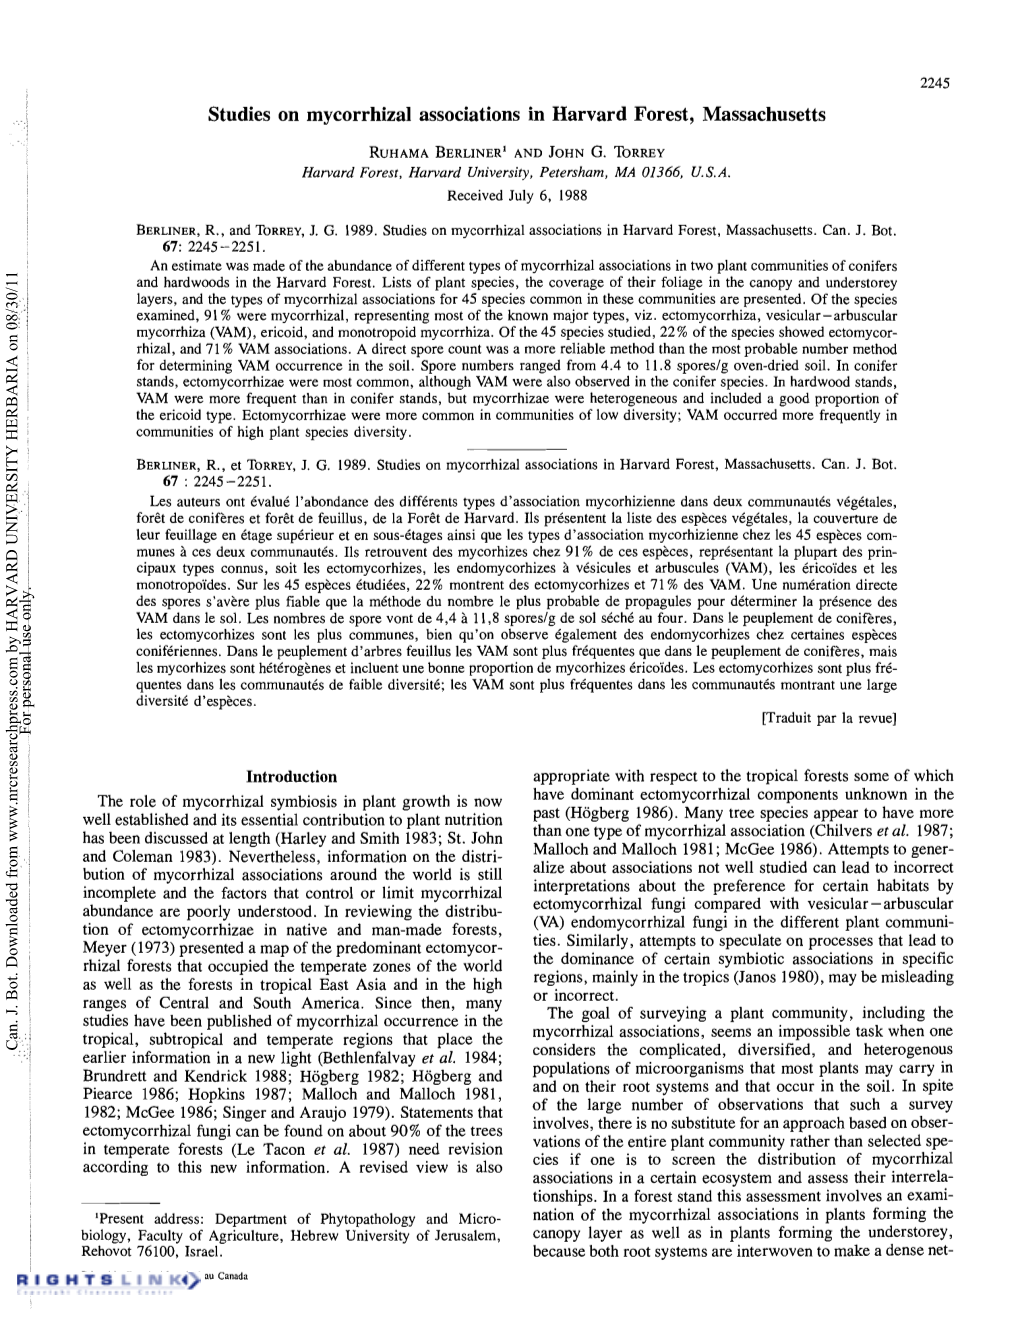 Studies on Mycorrhizal Associations in Harvard Forest, Massachusetts